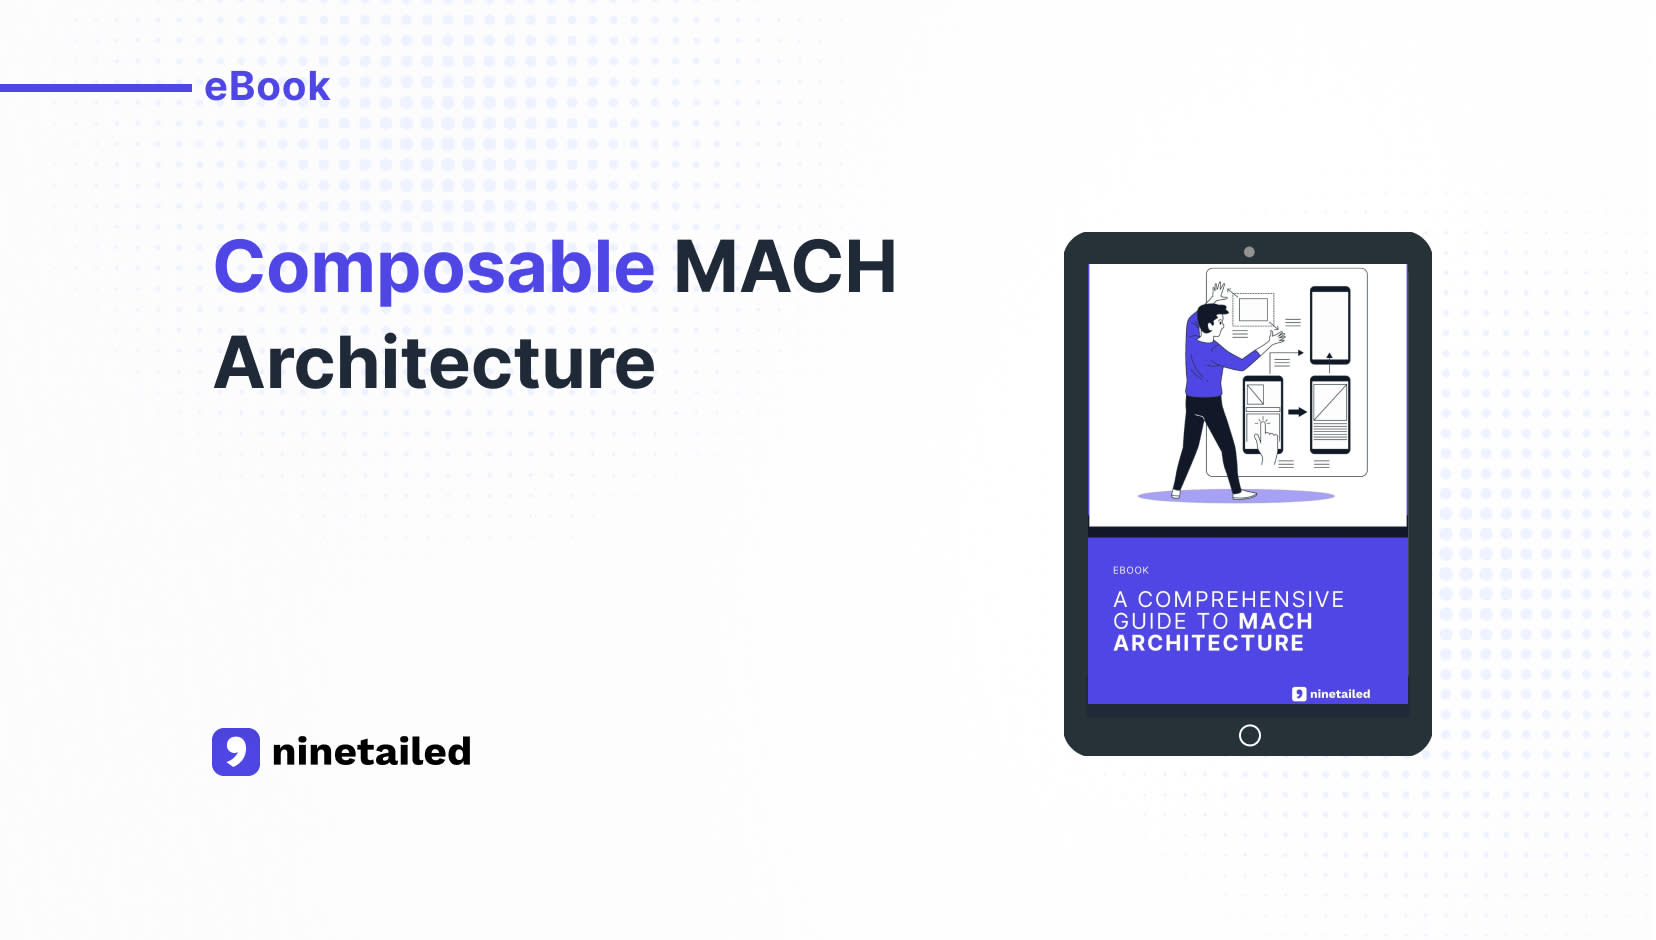 MACH Architecture Ebook Cover Image